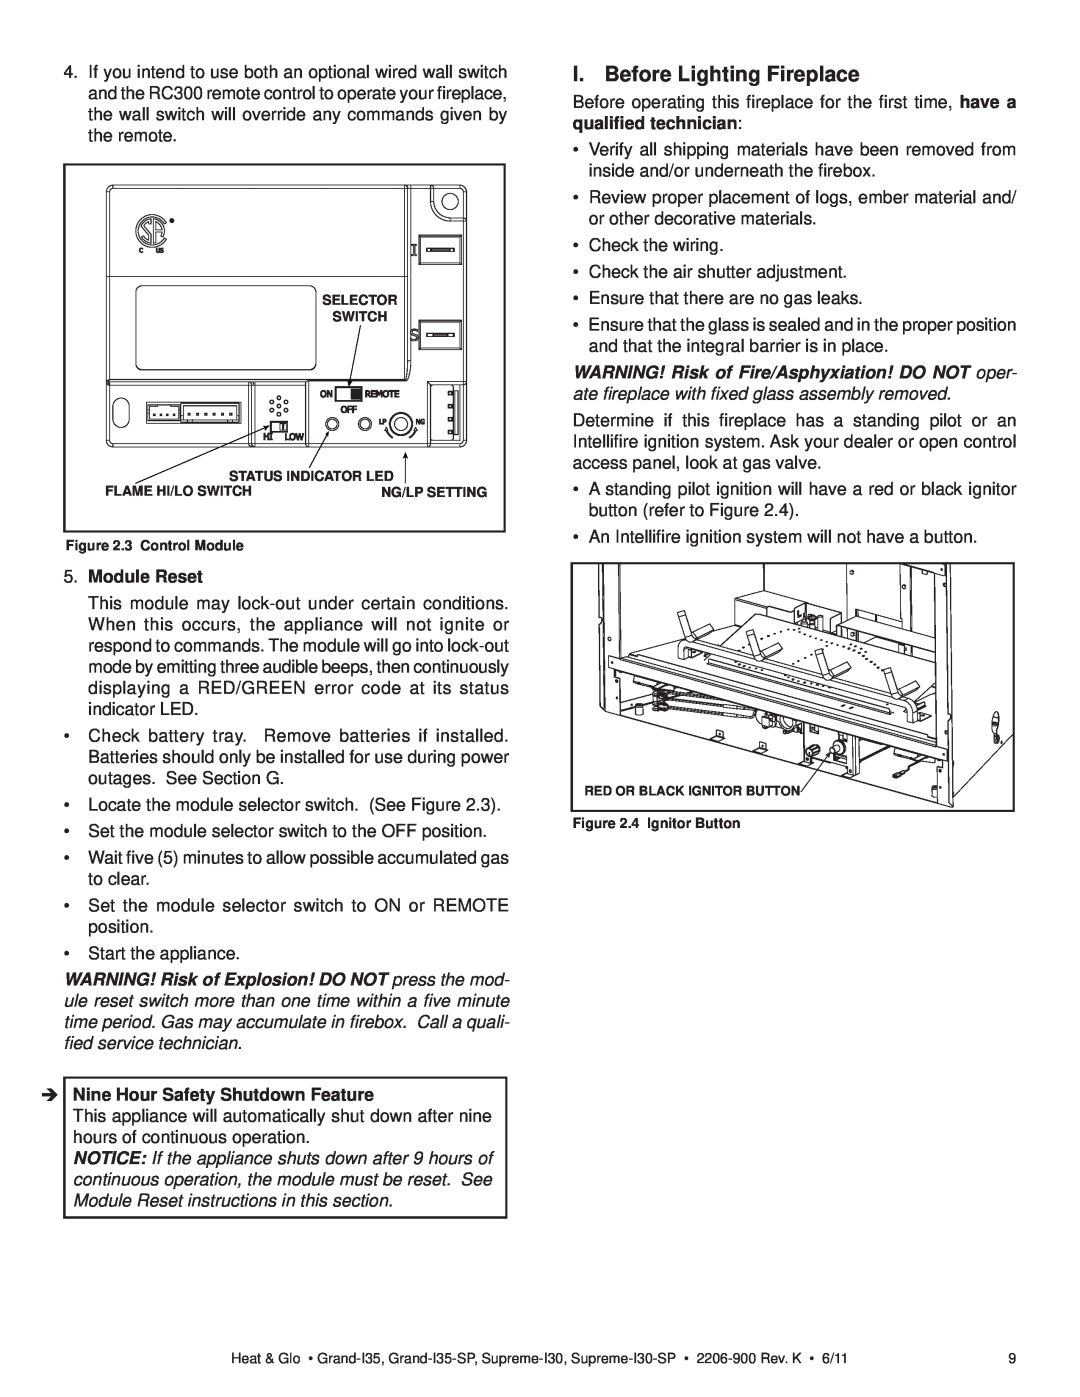 Heat & Glo LifeStyle SUPREME-I30, GRAND-I35 I. Before Lighting Fireplace, Module Reset, Nine Hour Safety Shutdown Feature 